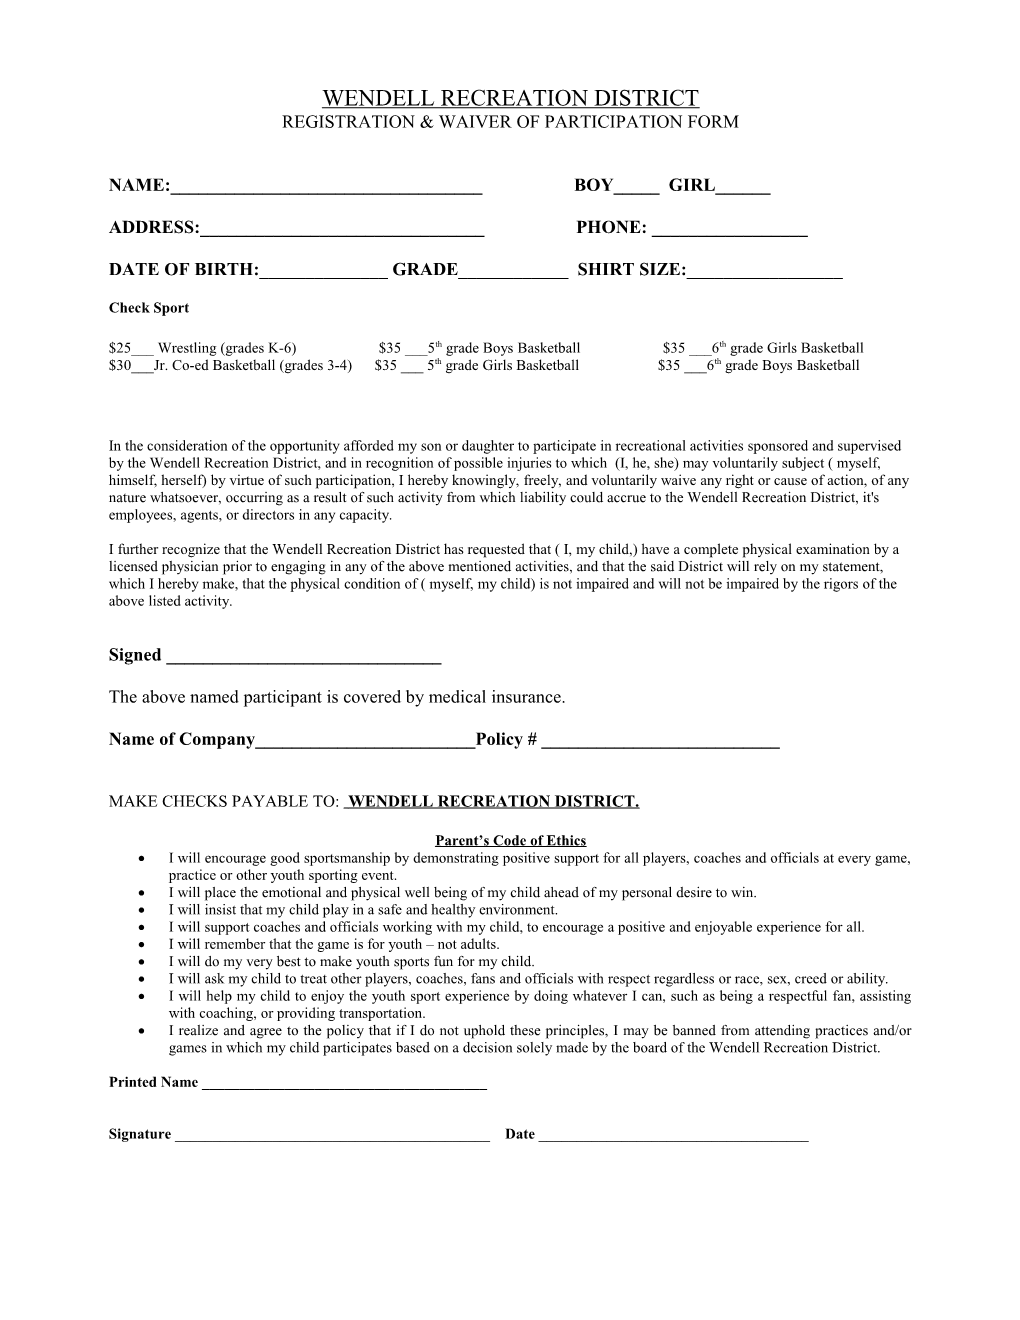 Registration & Waiver of Participation Form